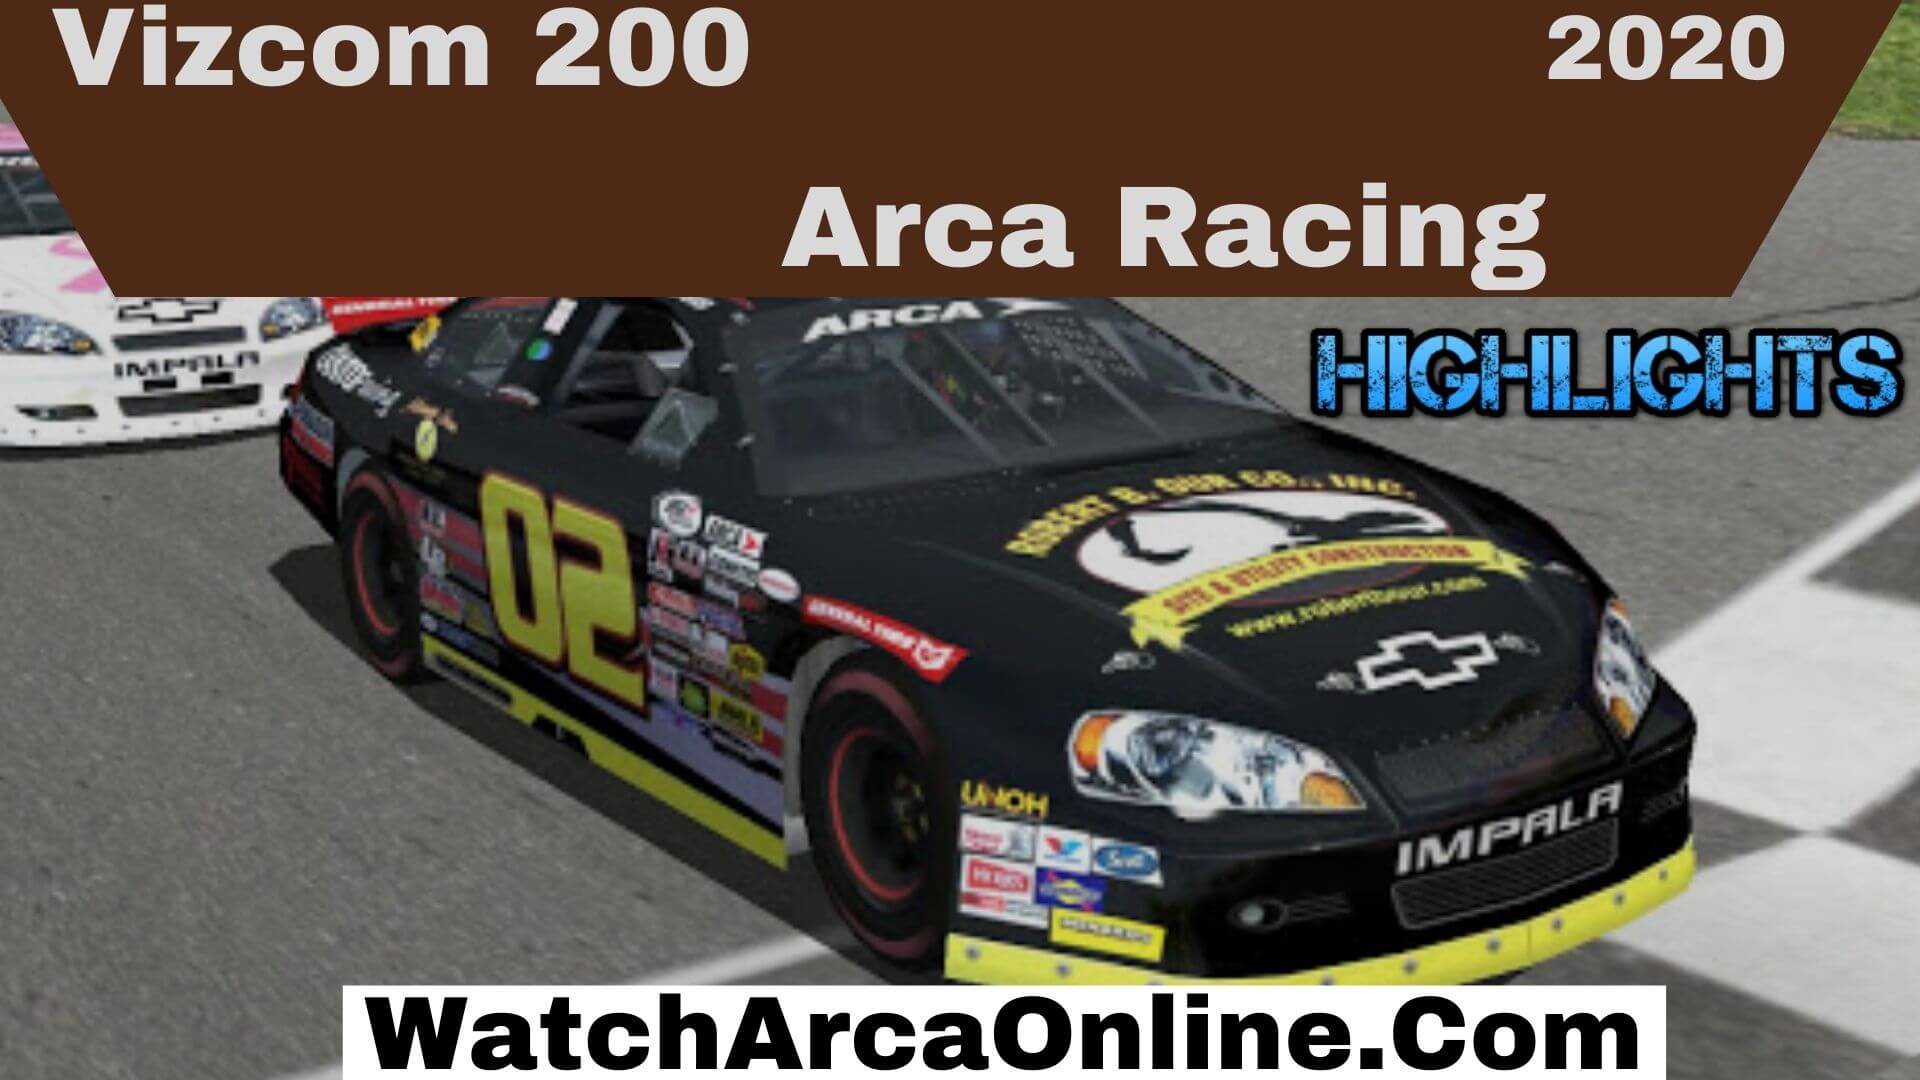 Vizcom 200 Arca Racing Highlights 2020